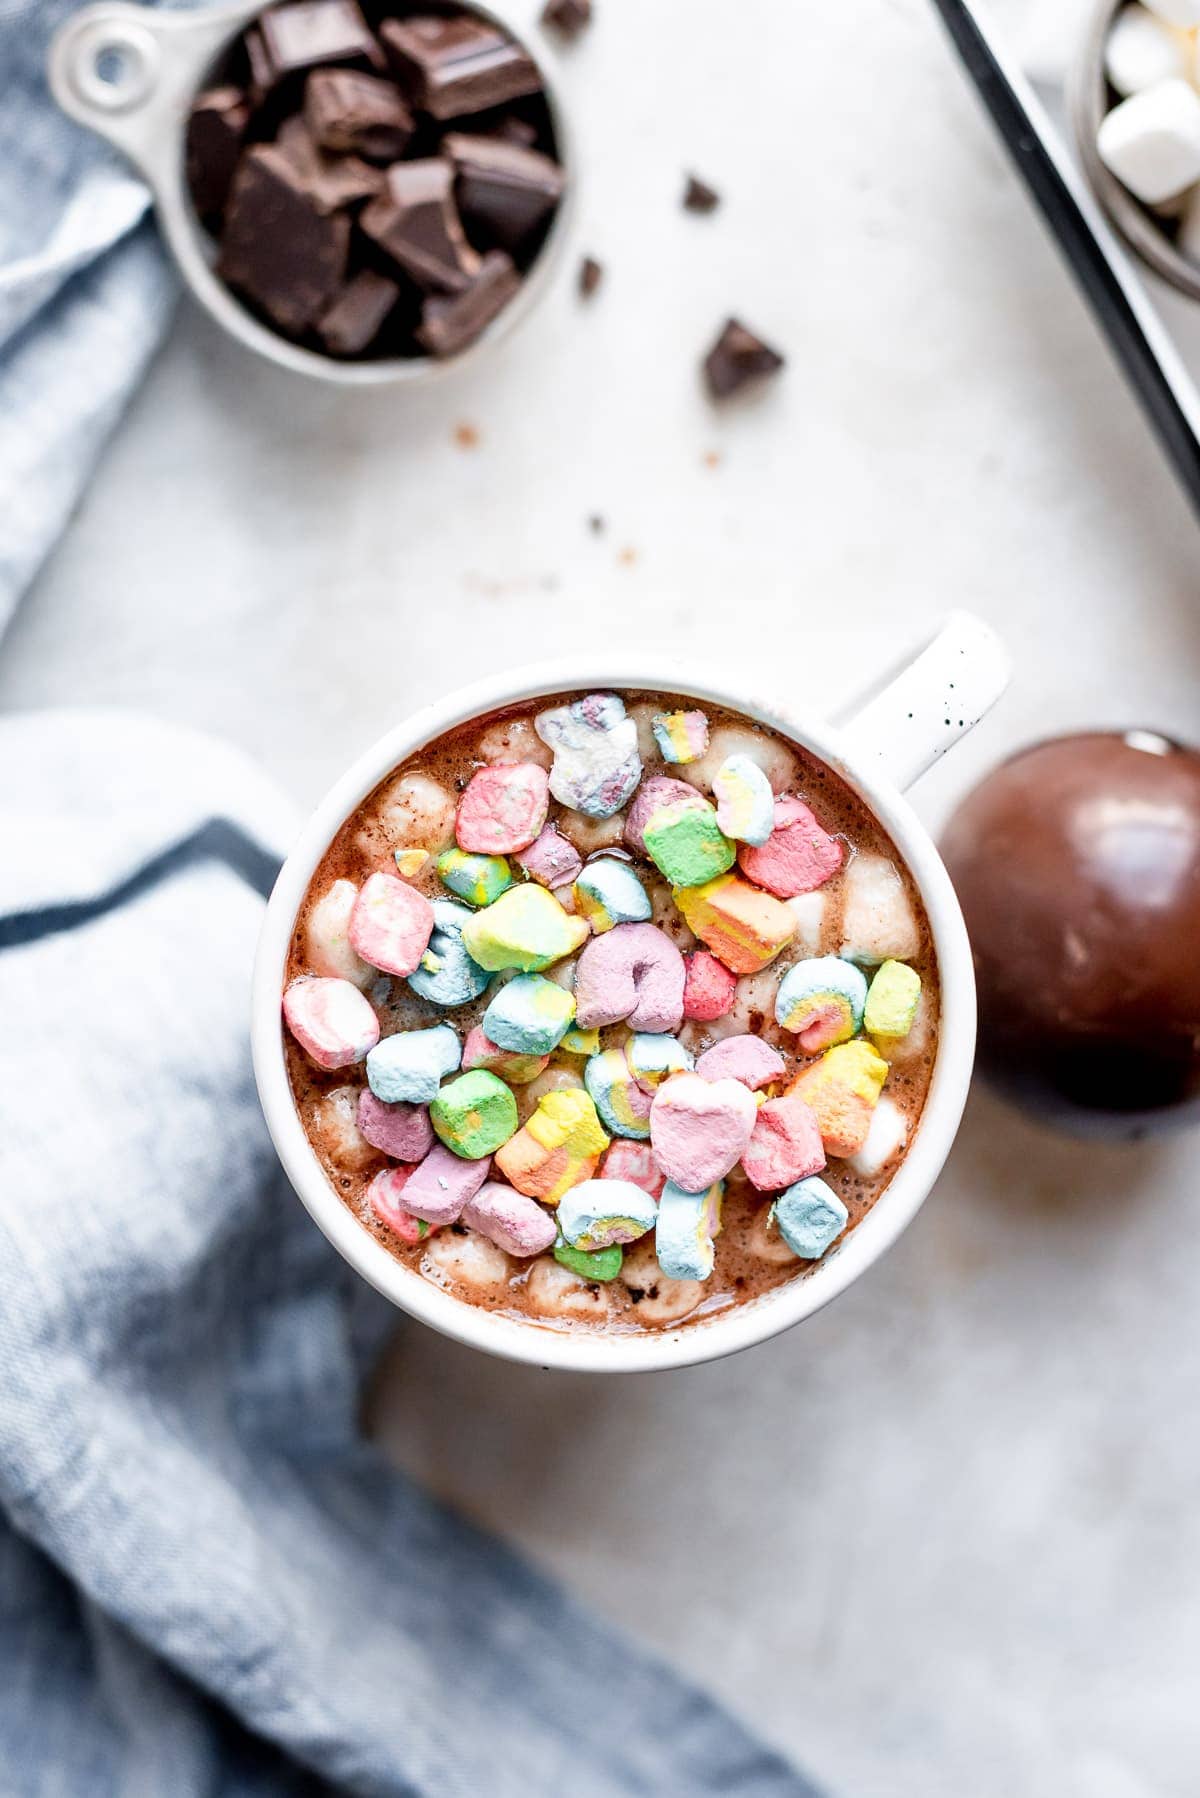 lucky charms marshmallows inside hot chocolate mug